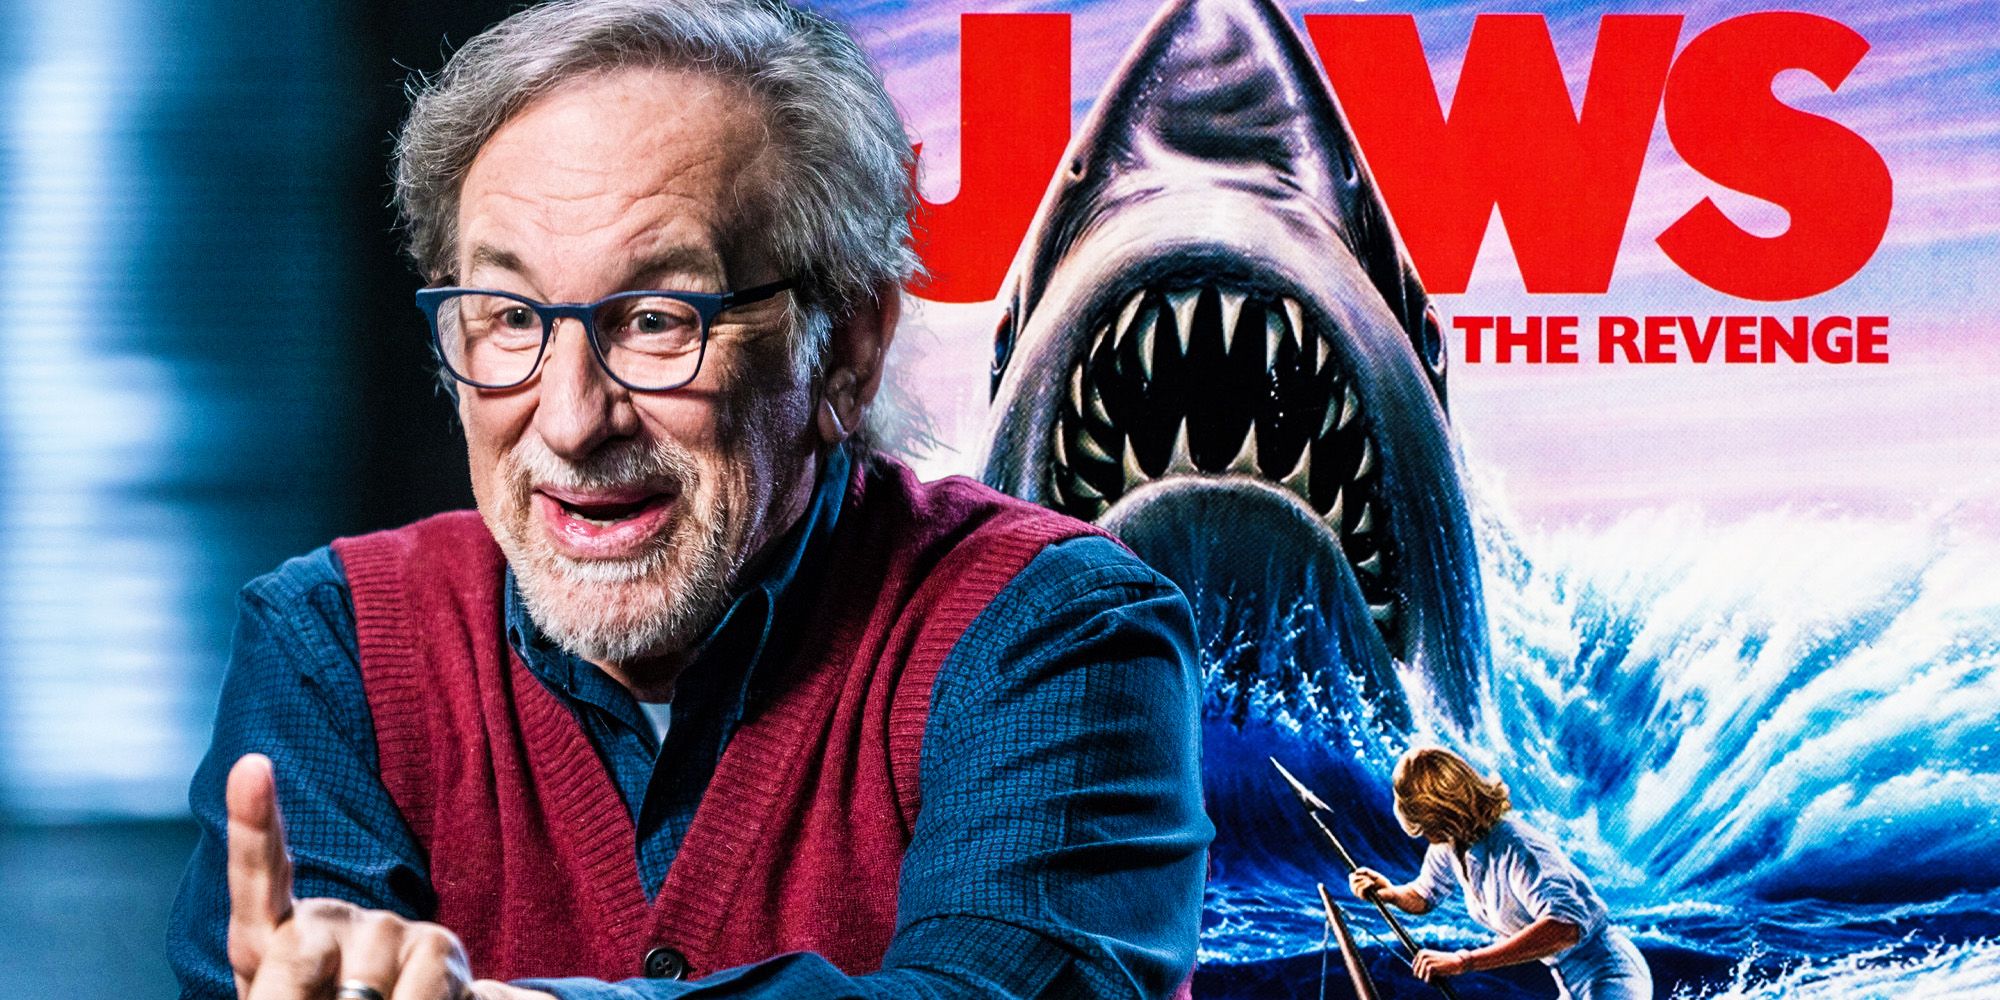 La carta que Steven Spielberg envió a Jaws: The Revenge's Director